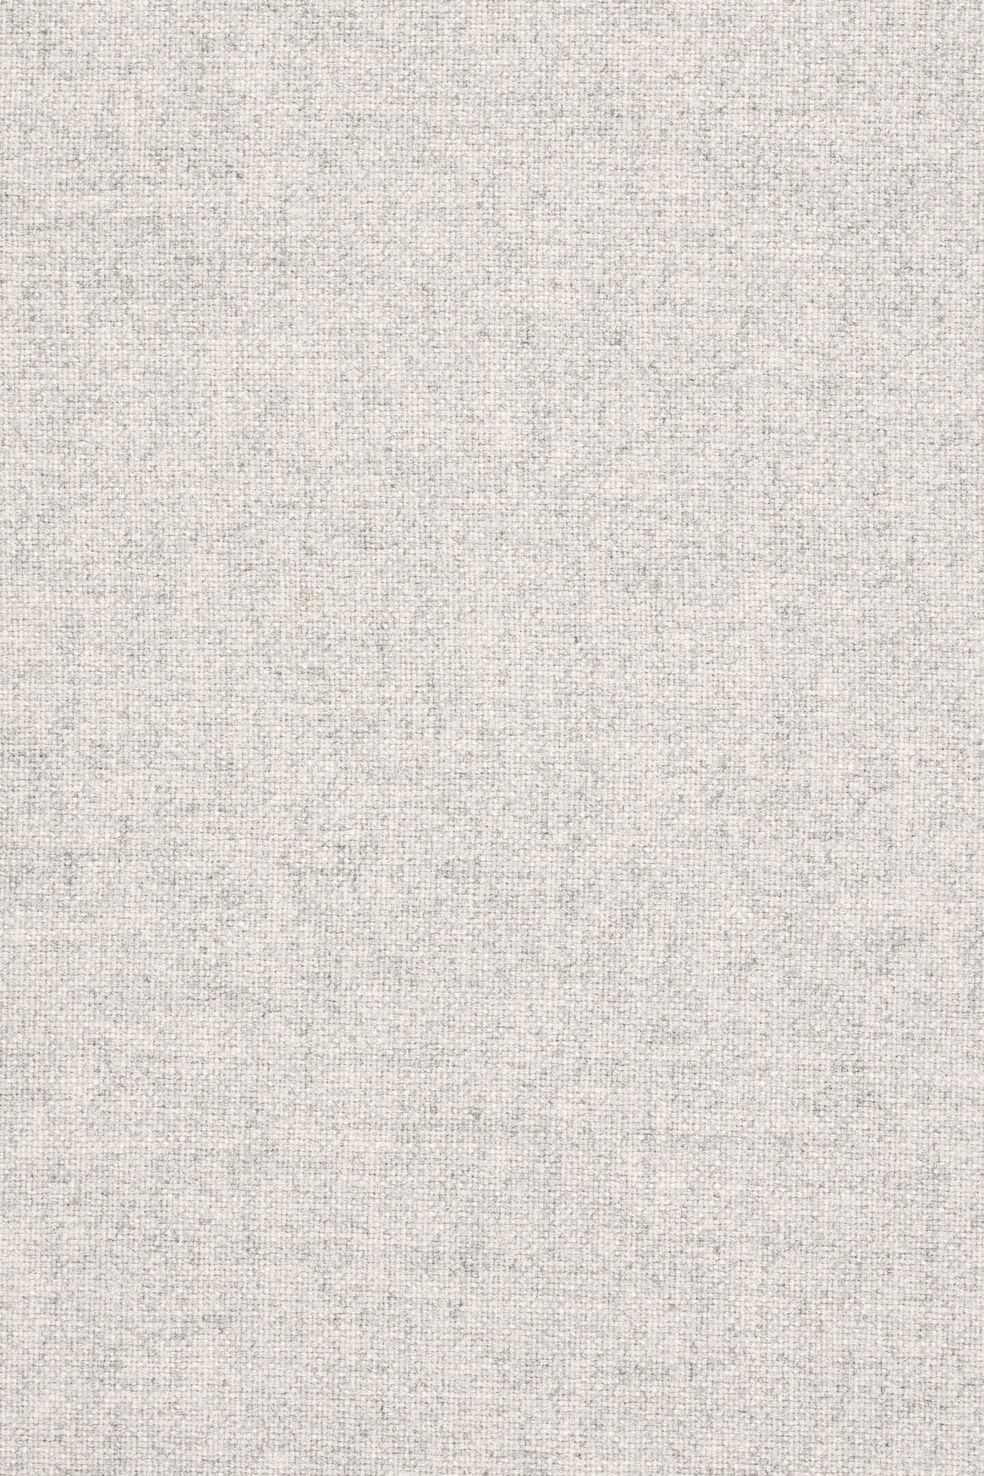 Fabric sample Tonica 2 613 grey